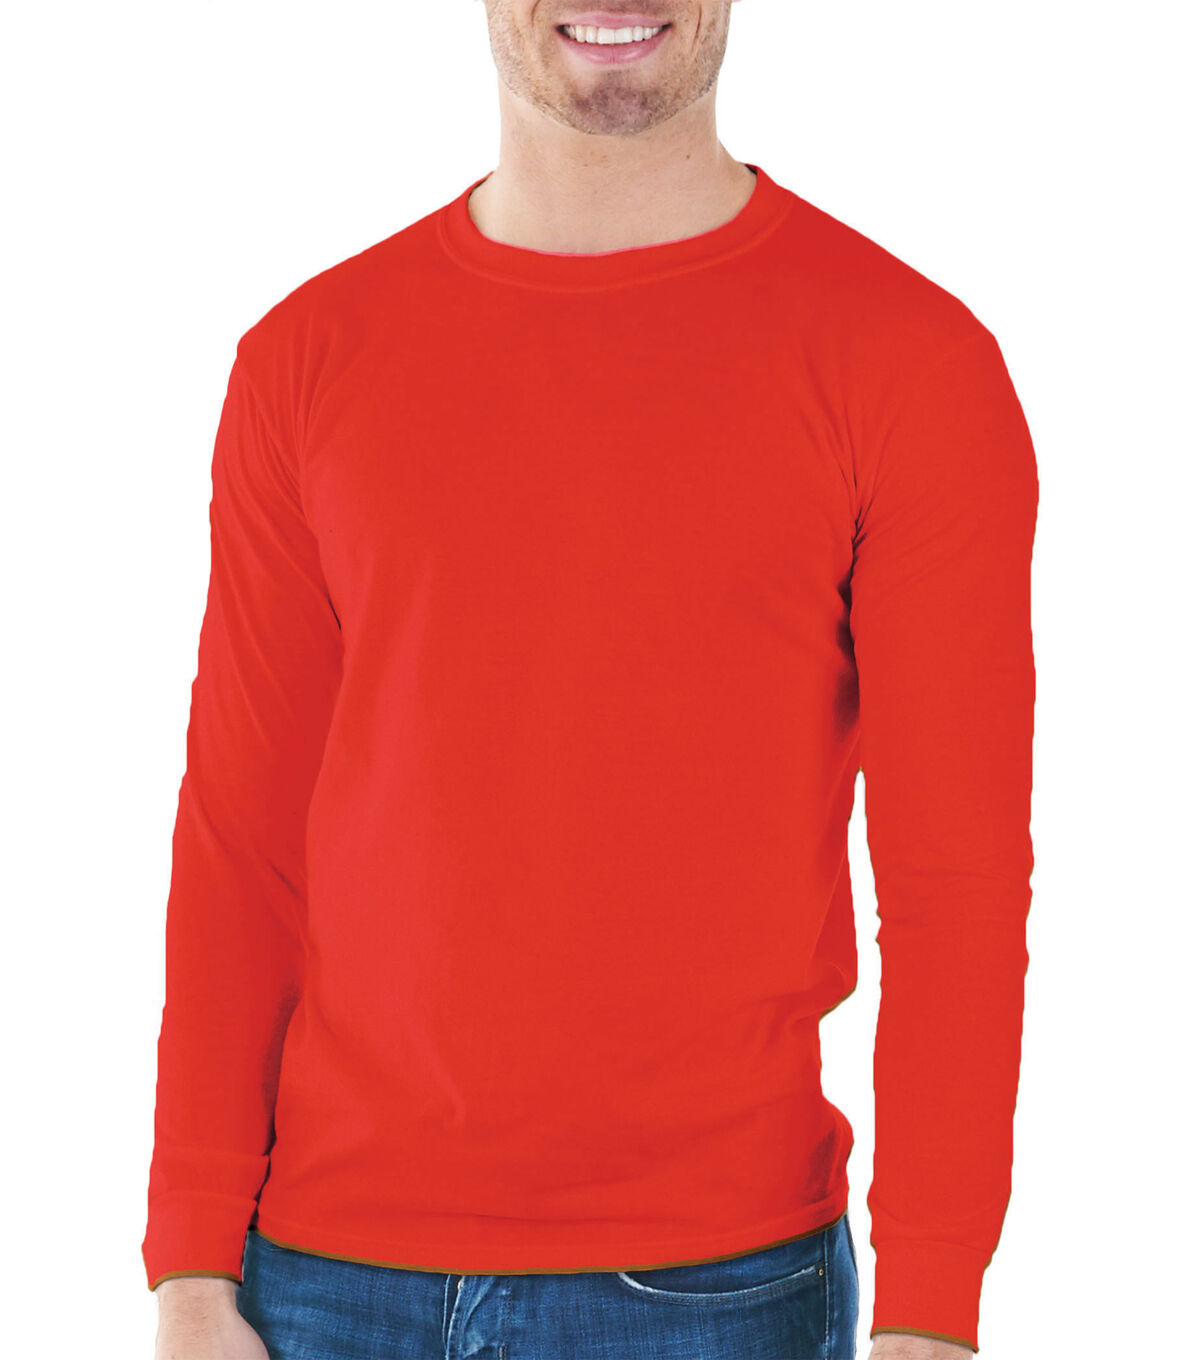 long red t shirt